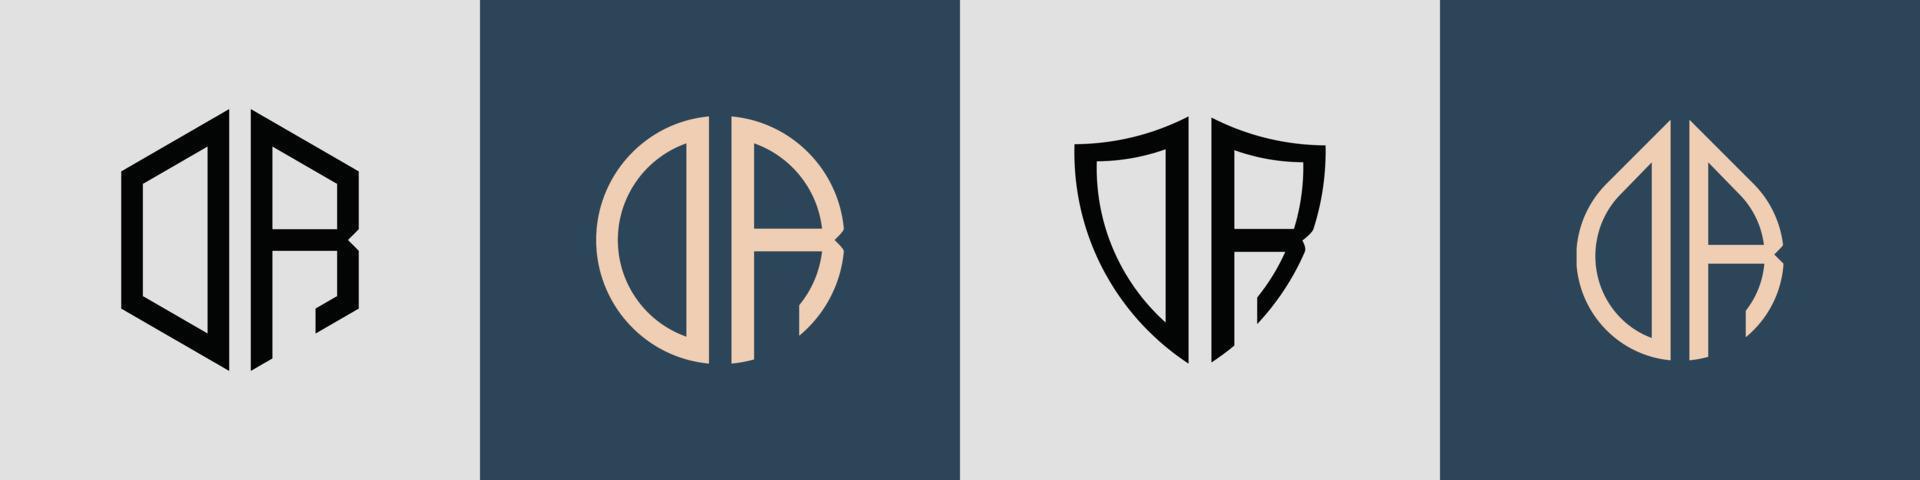 kreative einfache anfangsbuchstaben dr logo designs paket. vektor